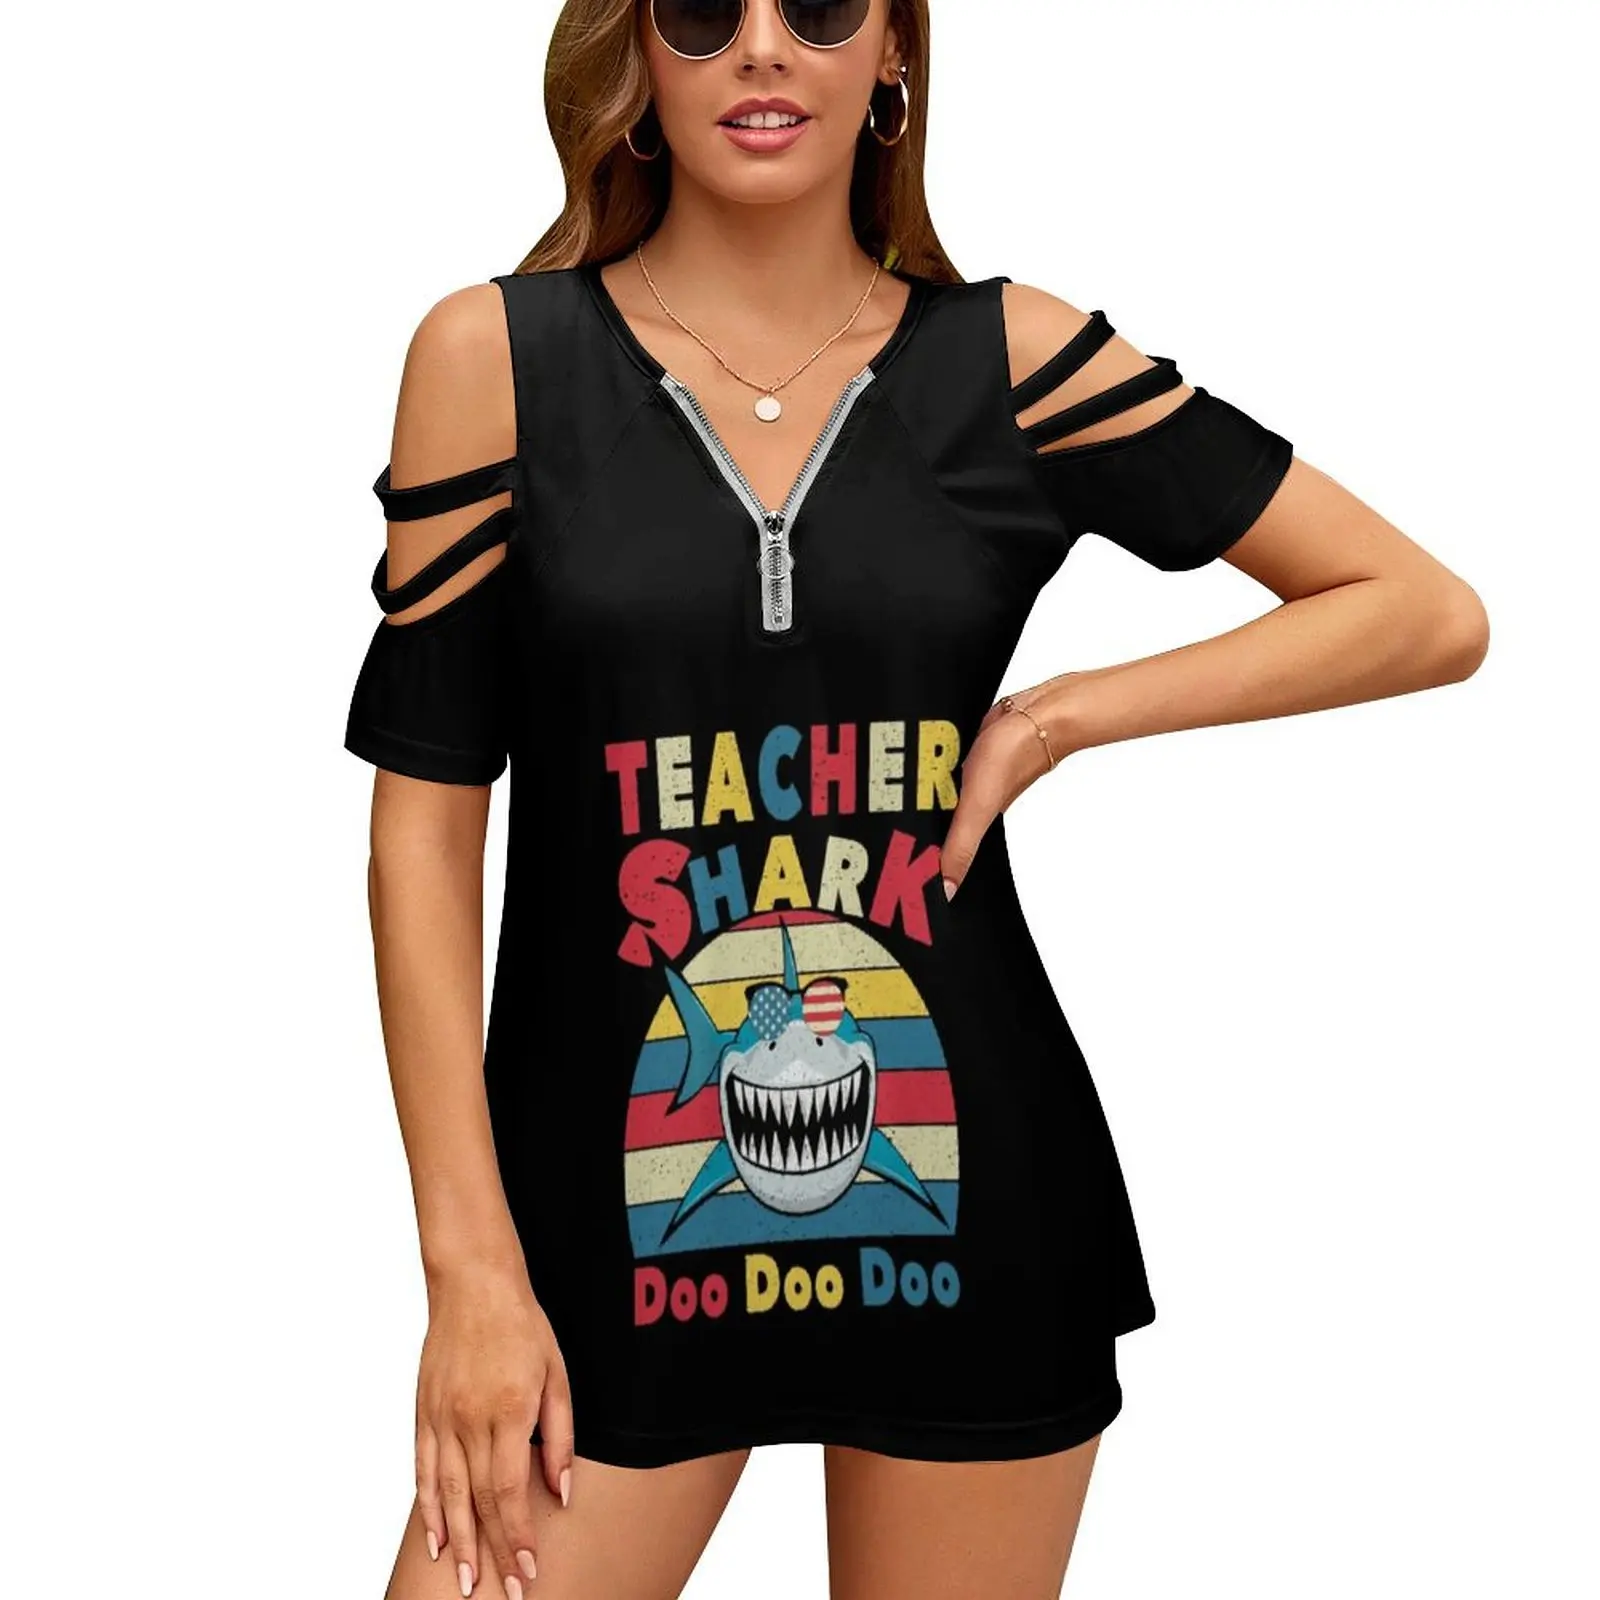 

Teacher Shark Funny T-Shirts Dooo Doo Doo Streetwear T-Shirt Cold Shoulder Short Sleeve Graphic Tshirt Sexy Female Oversize Tops